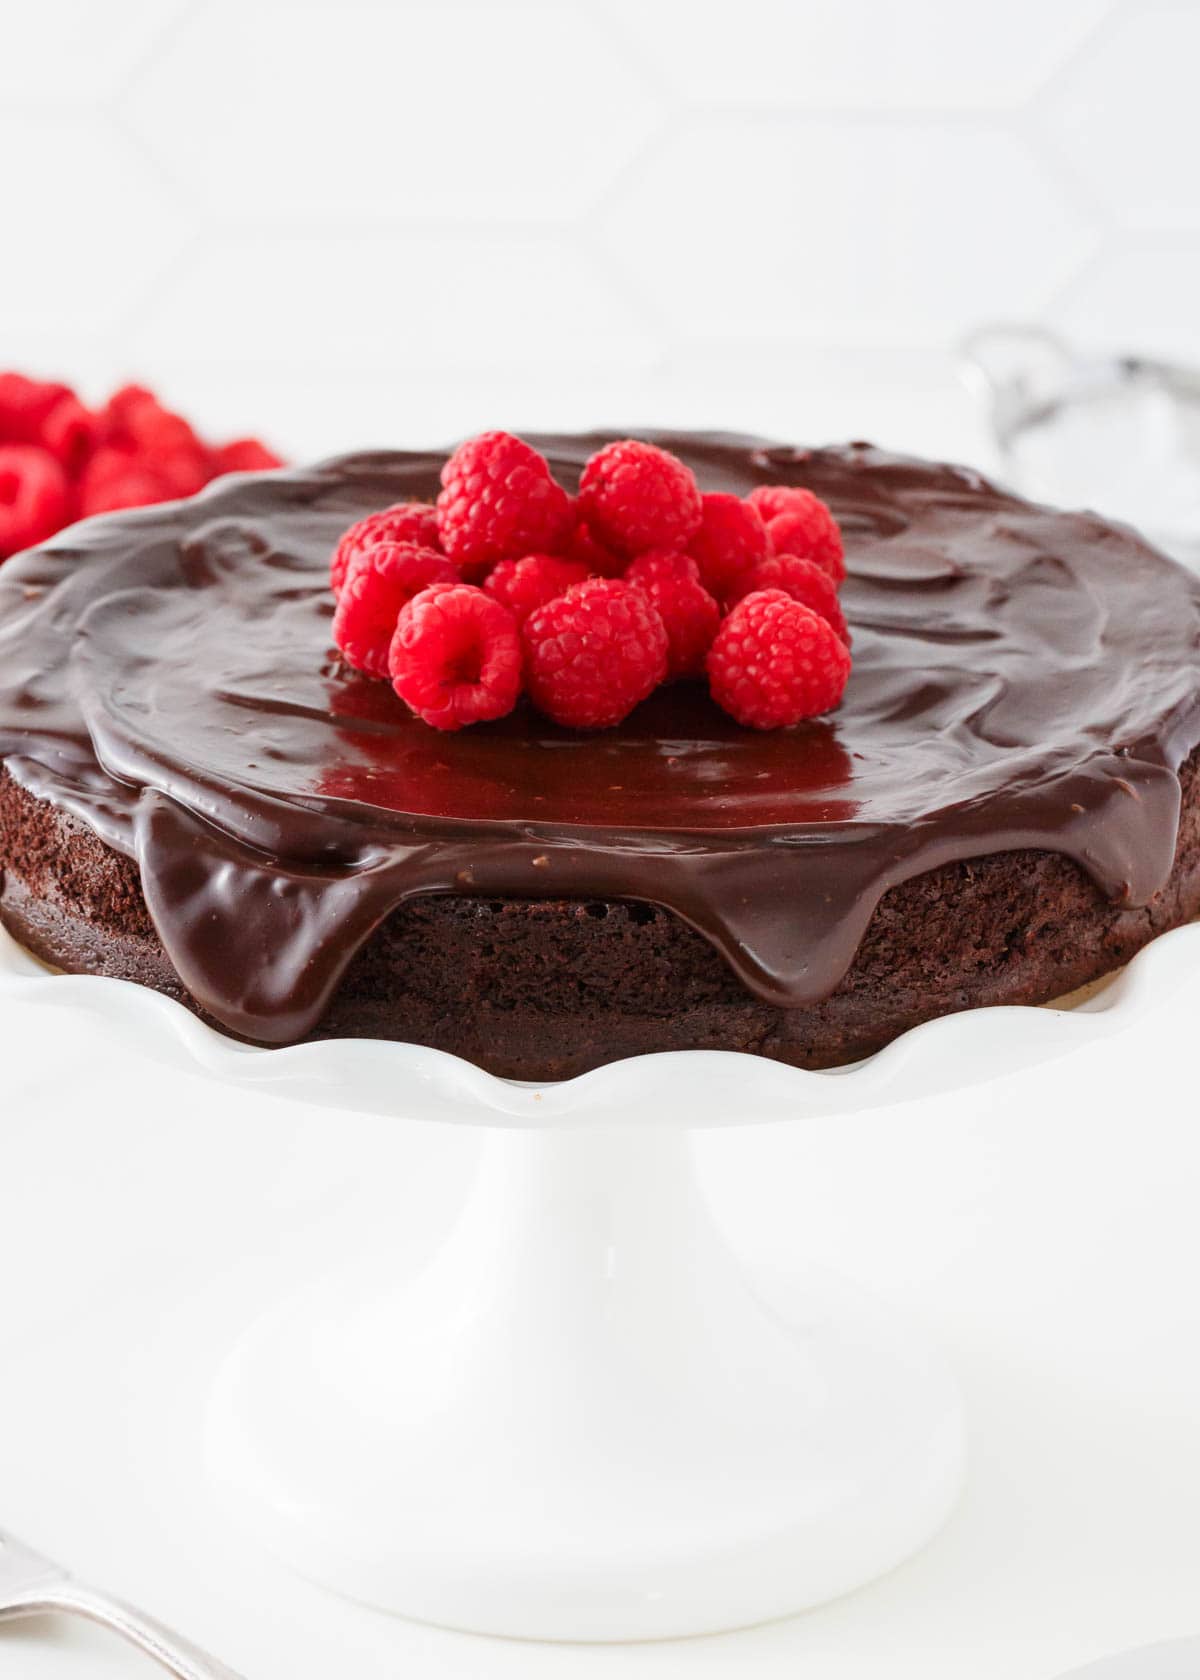 Flourless chocolate cake with raspberries on top.